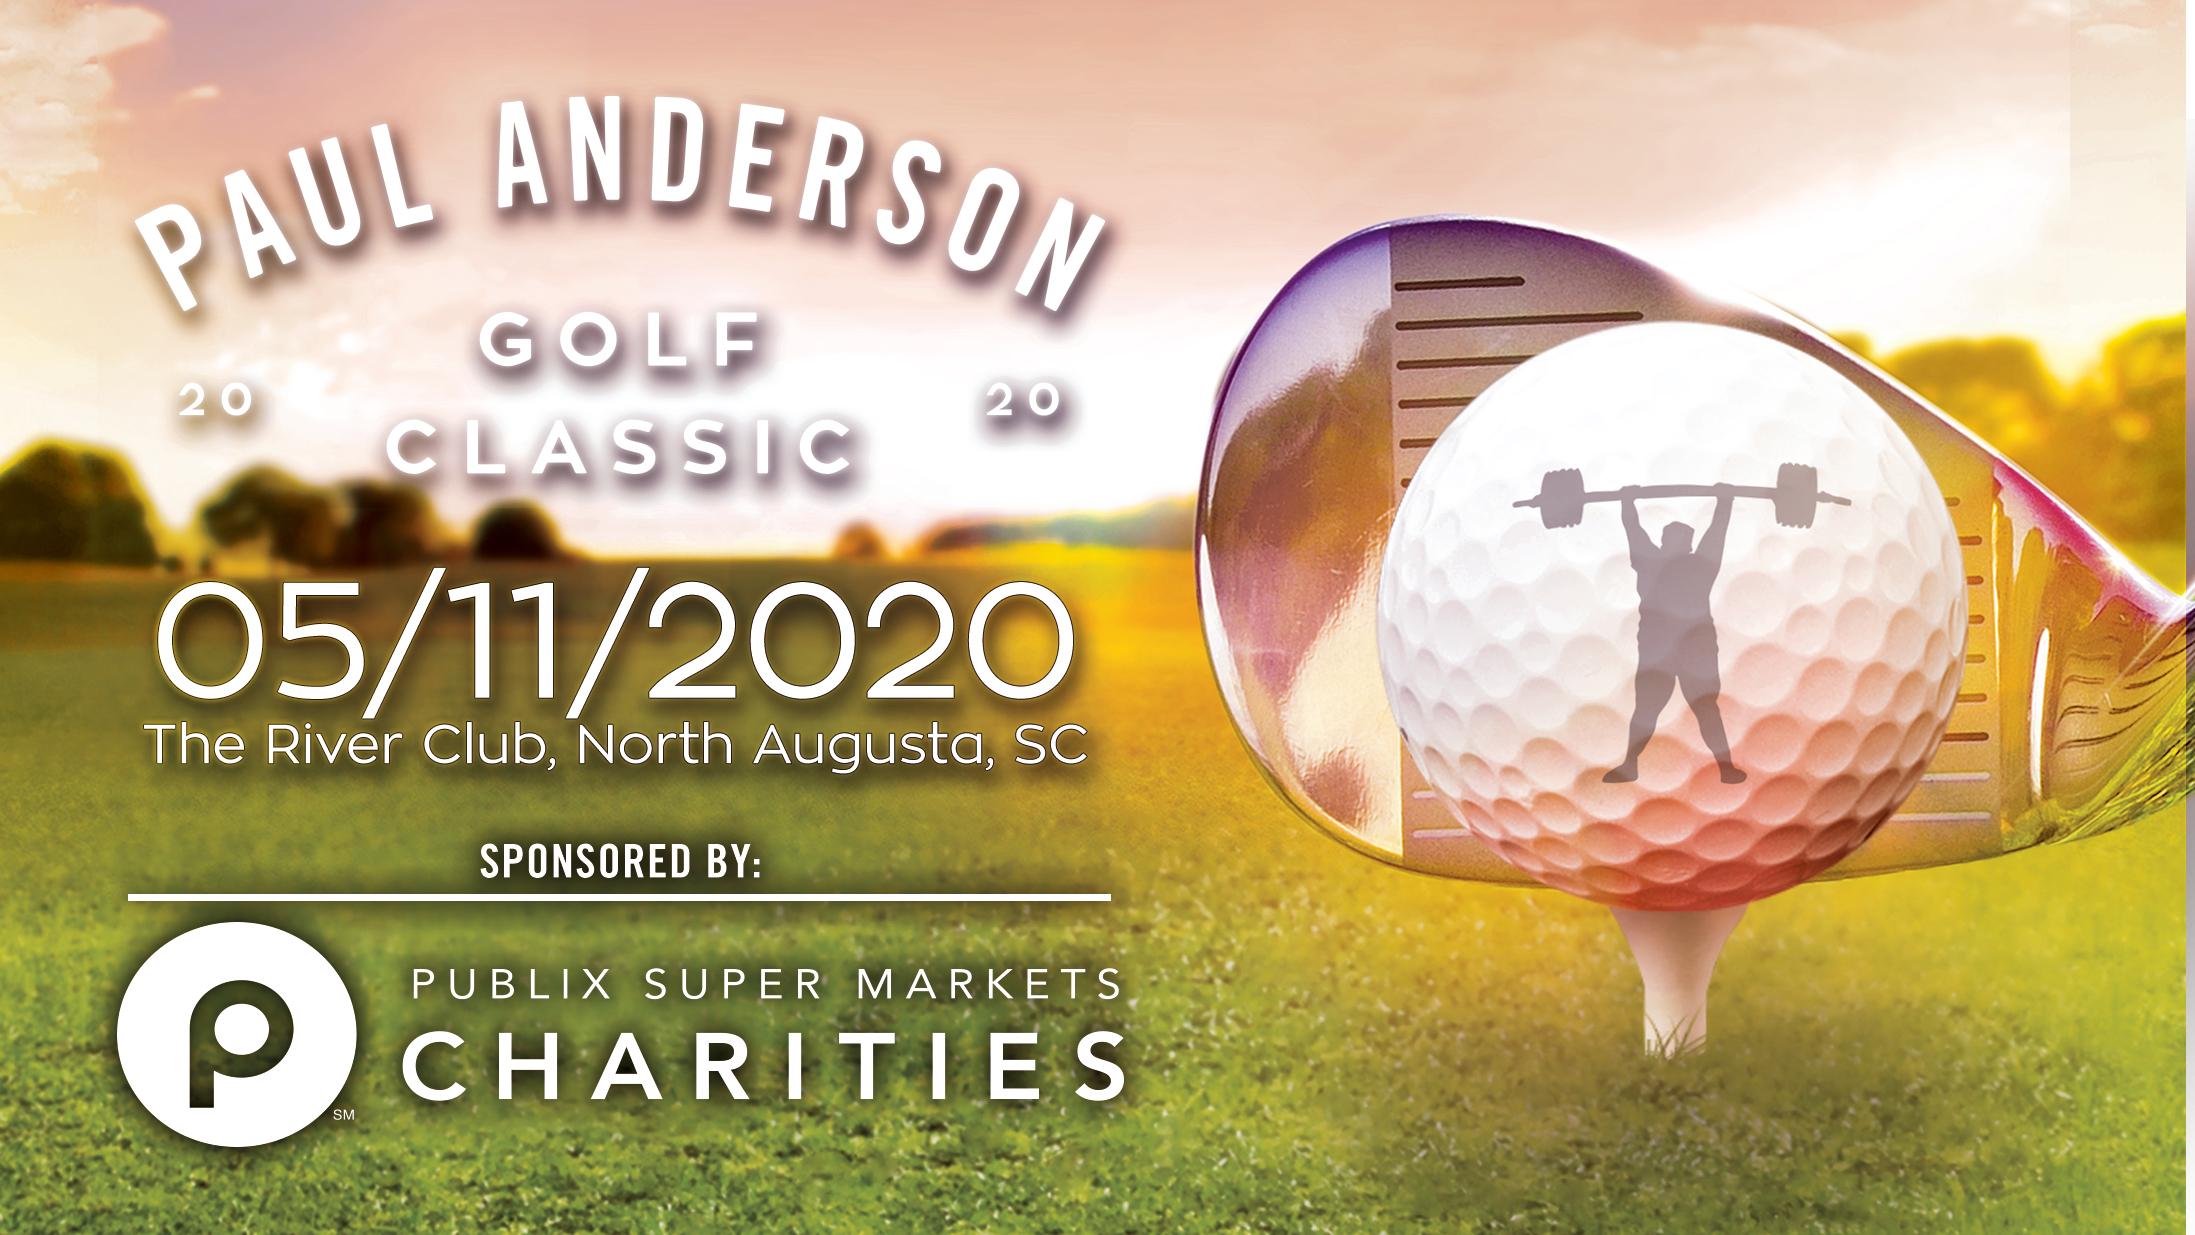 2020 Paul Anderson Golf Classic